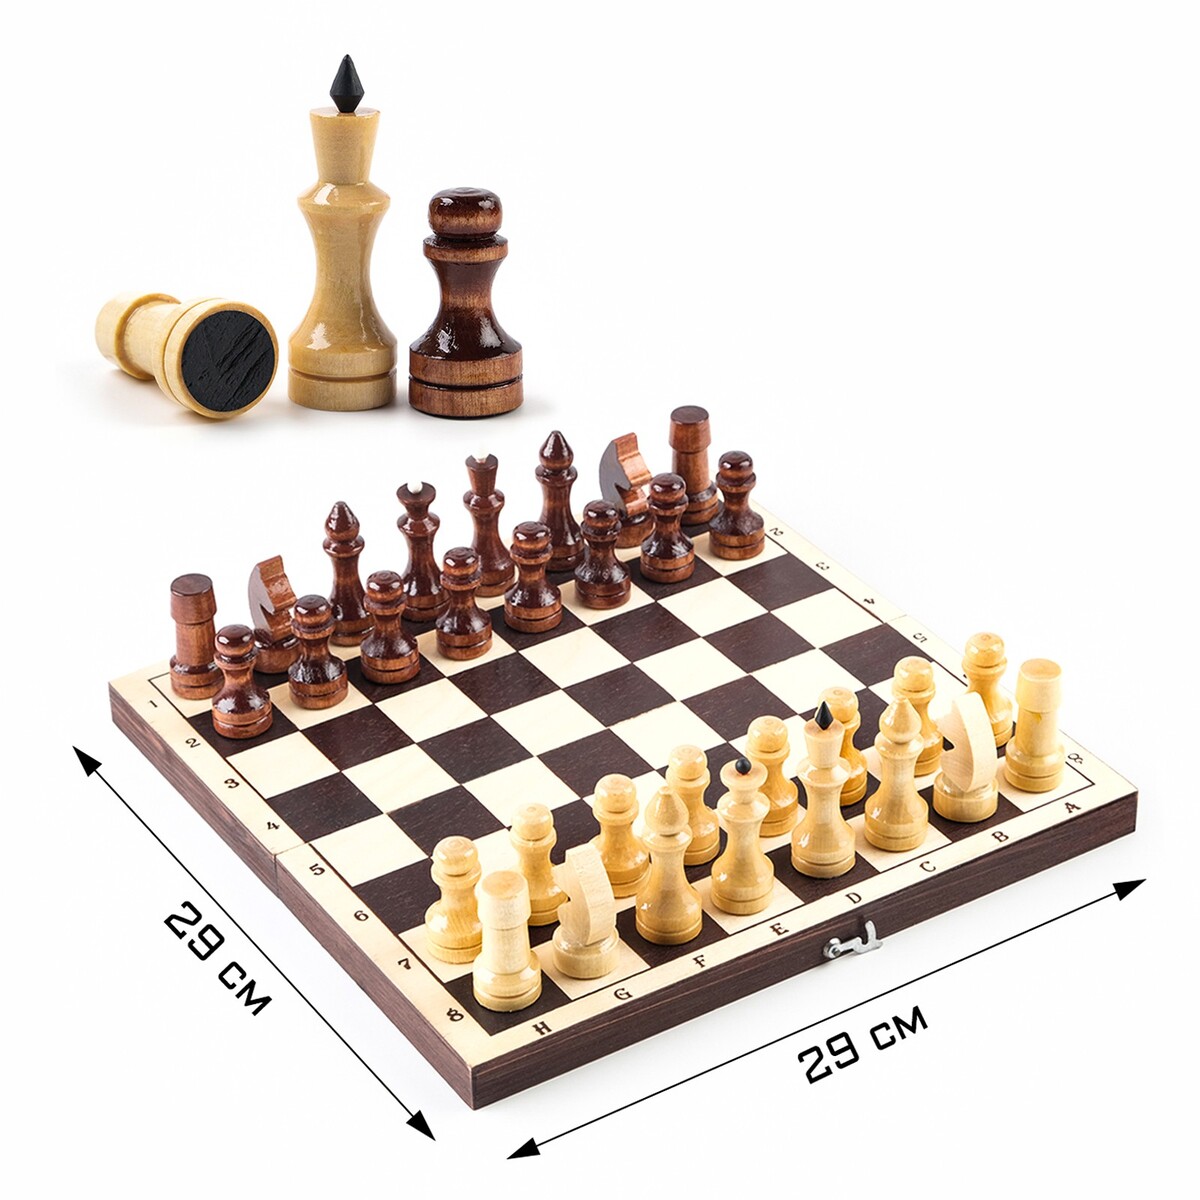 Шахматы обиходные, 29 х 29 х 4.3 см, темная доска, фигуры лак шахматы деревянные обиходные 29 х 29 см король h 7 2 см пешка h 4 5 см